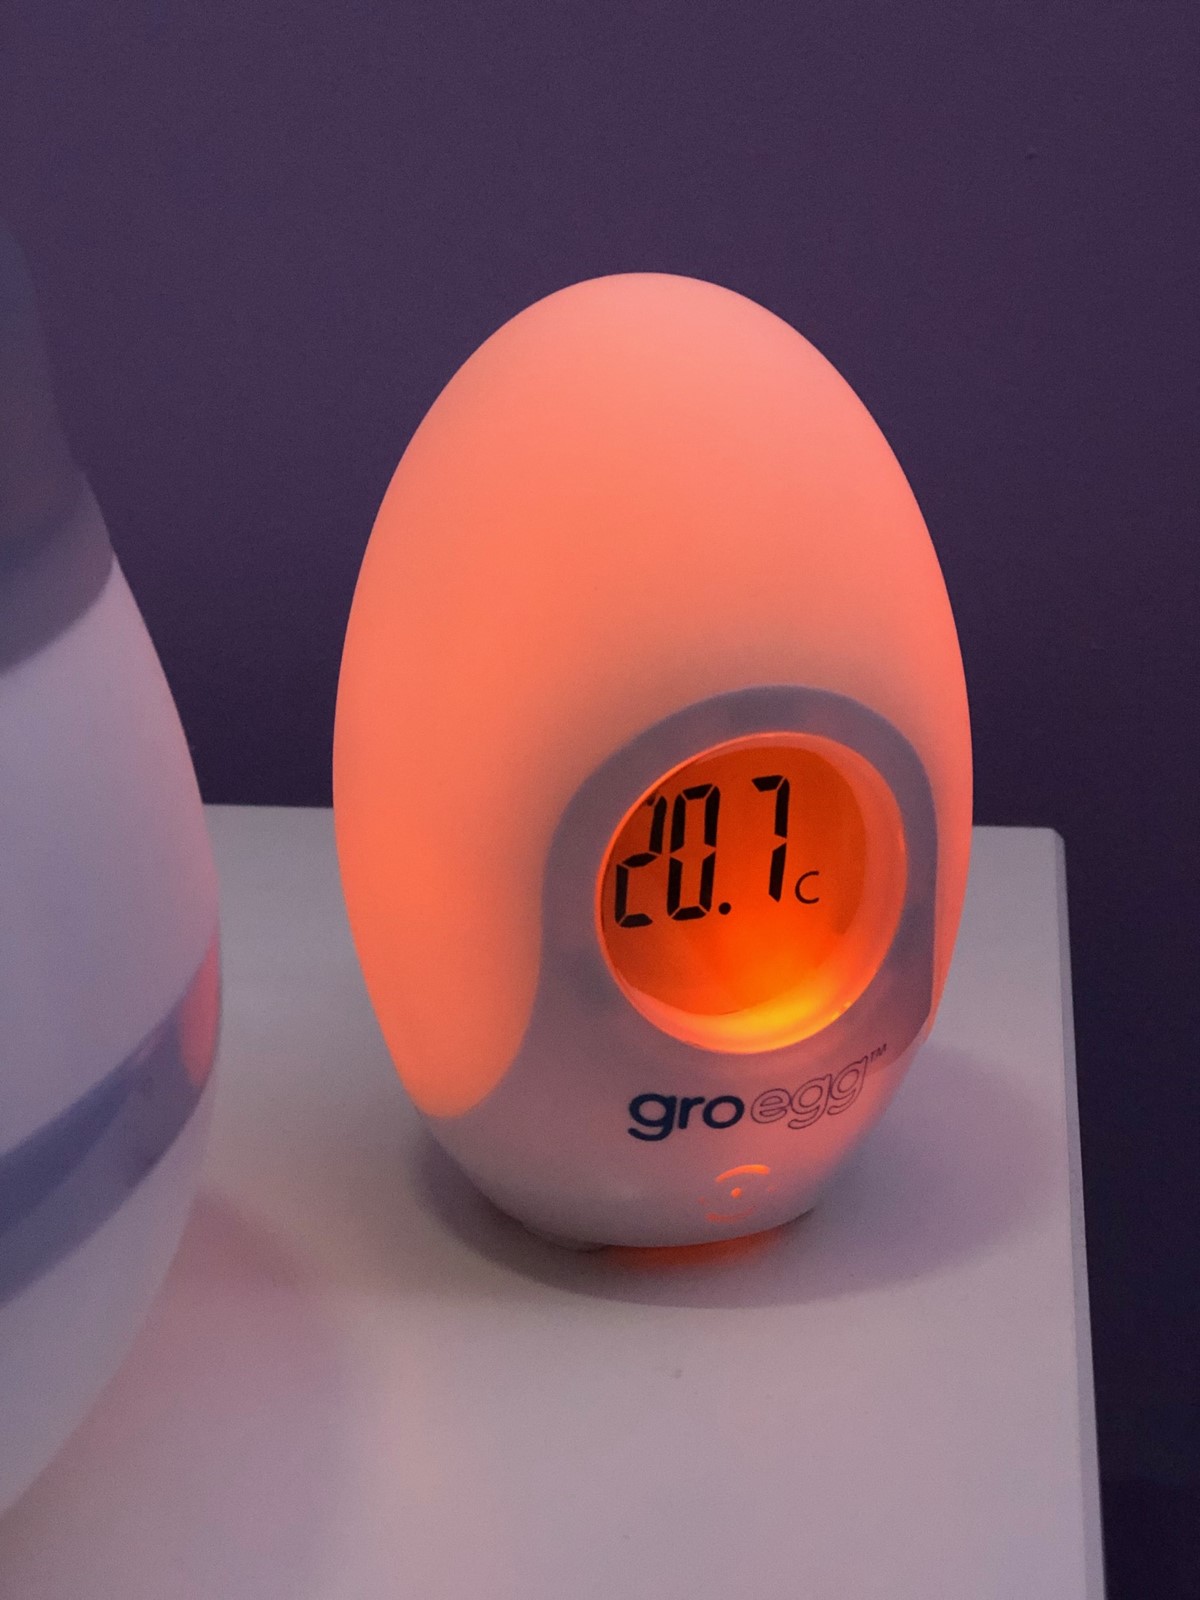 termometr gro egg opinie